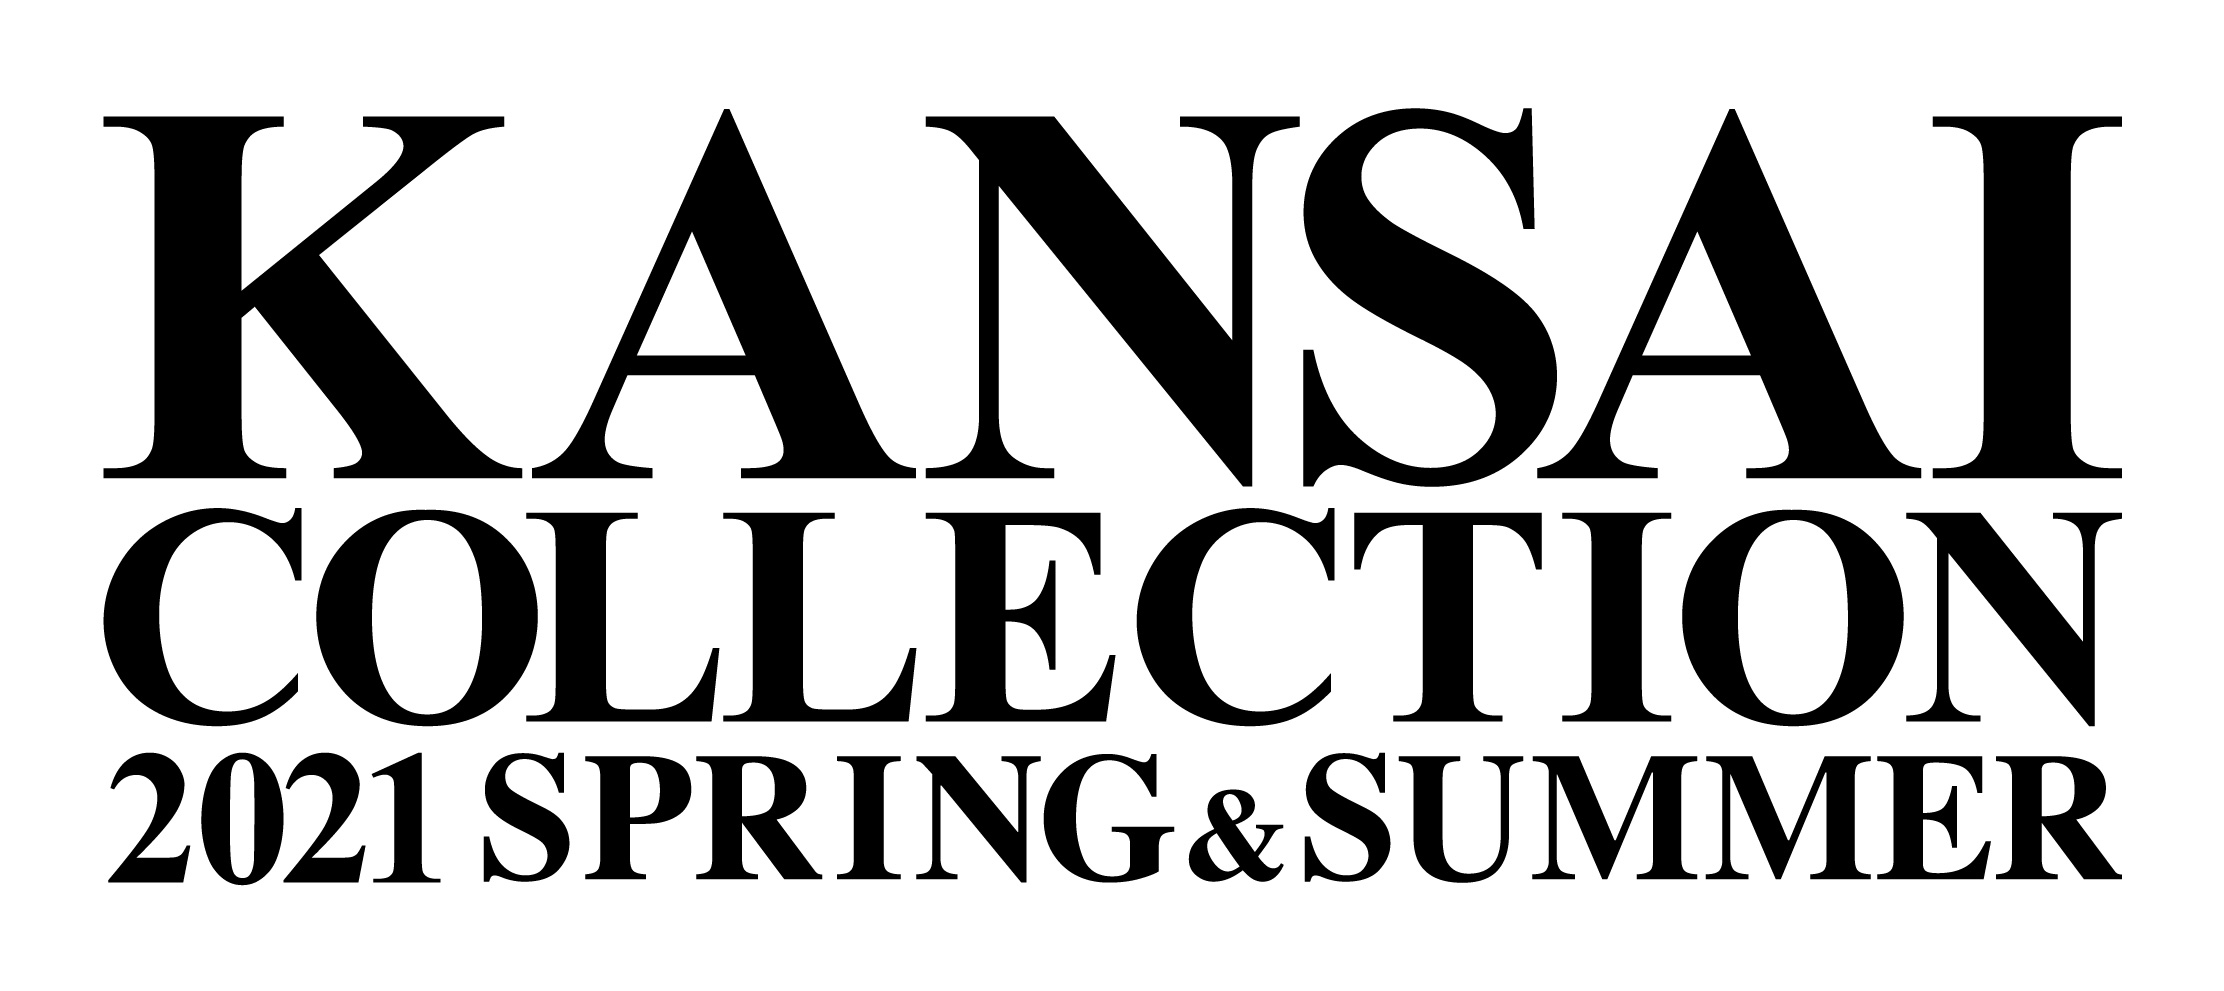 Kansai Collection 21 Spring Summer 手越祐也の出演が決定 株式会社kansai Collectionのプレスリリース